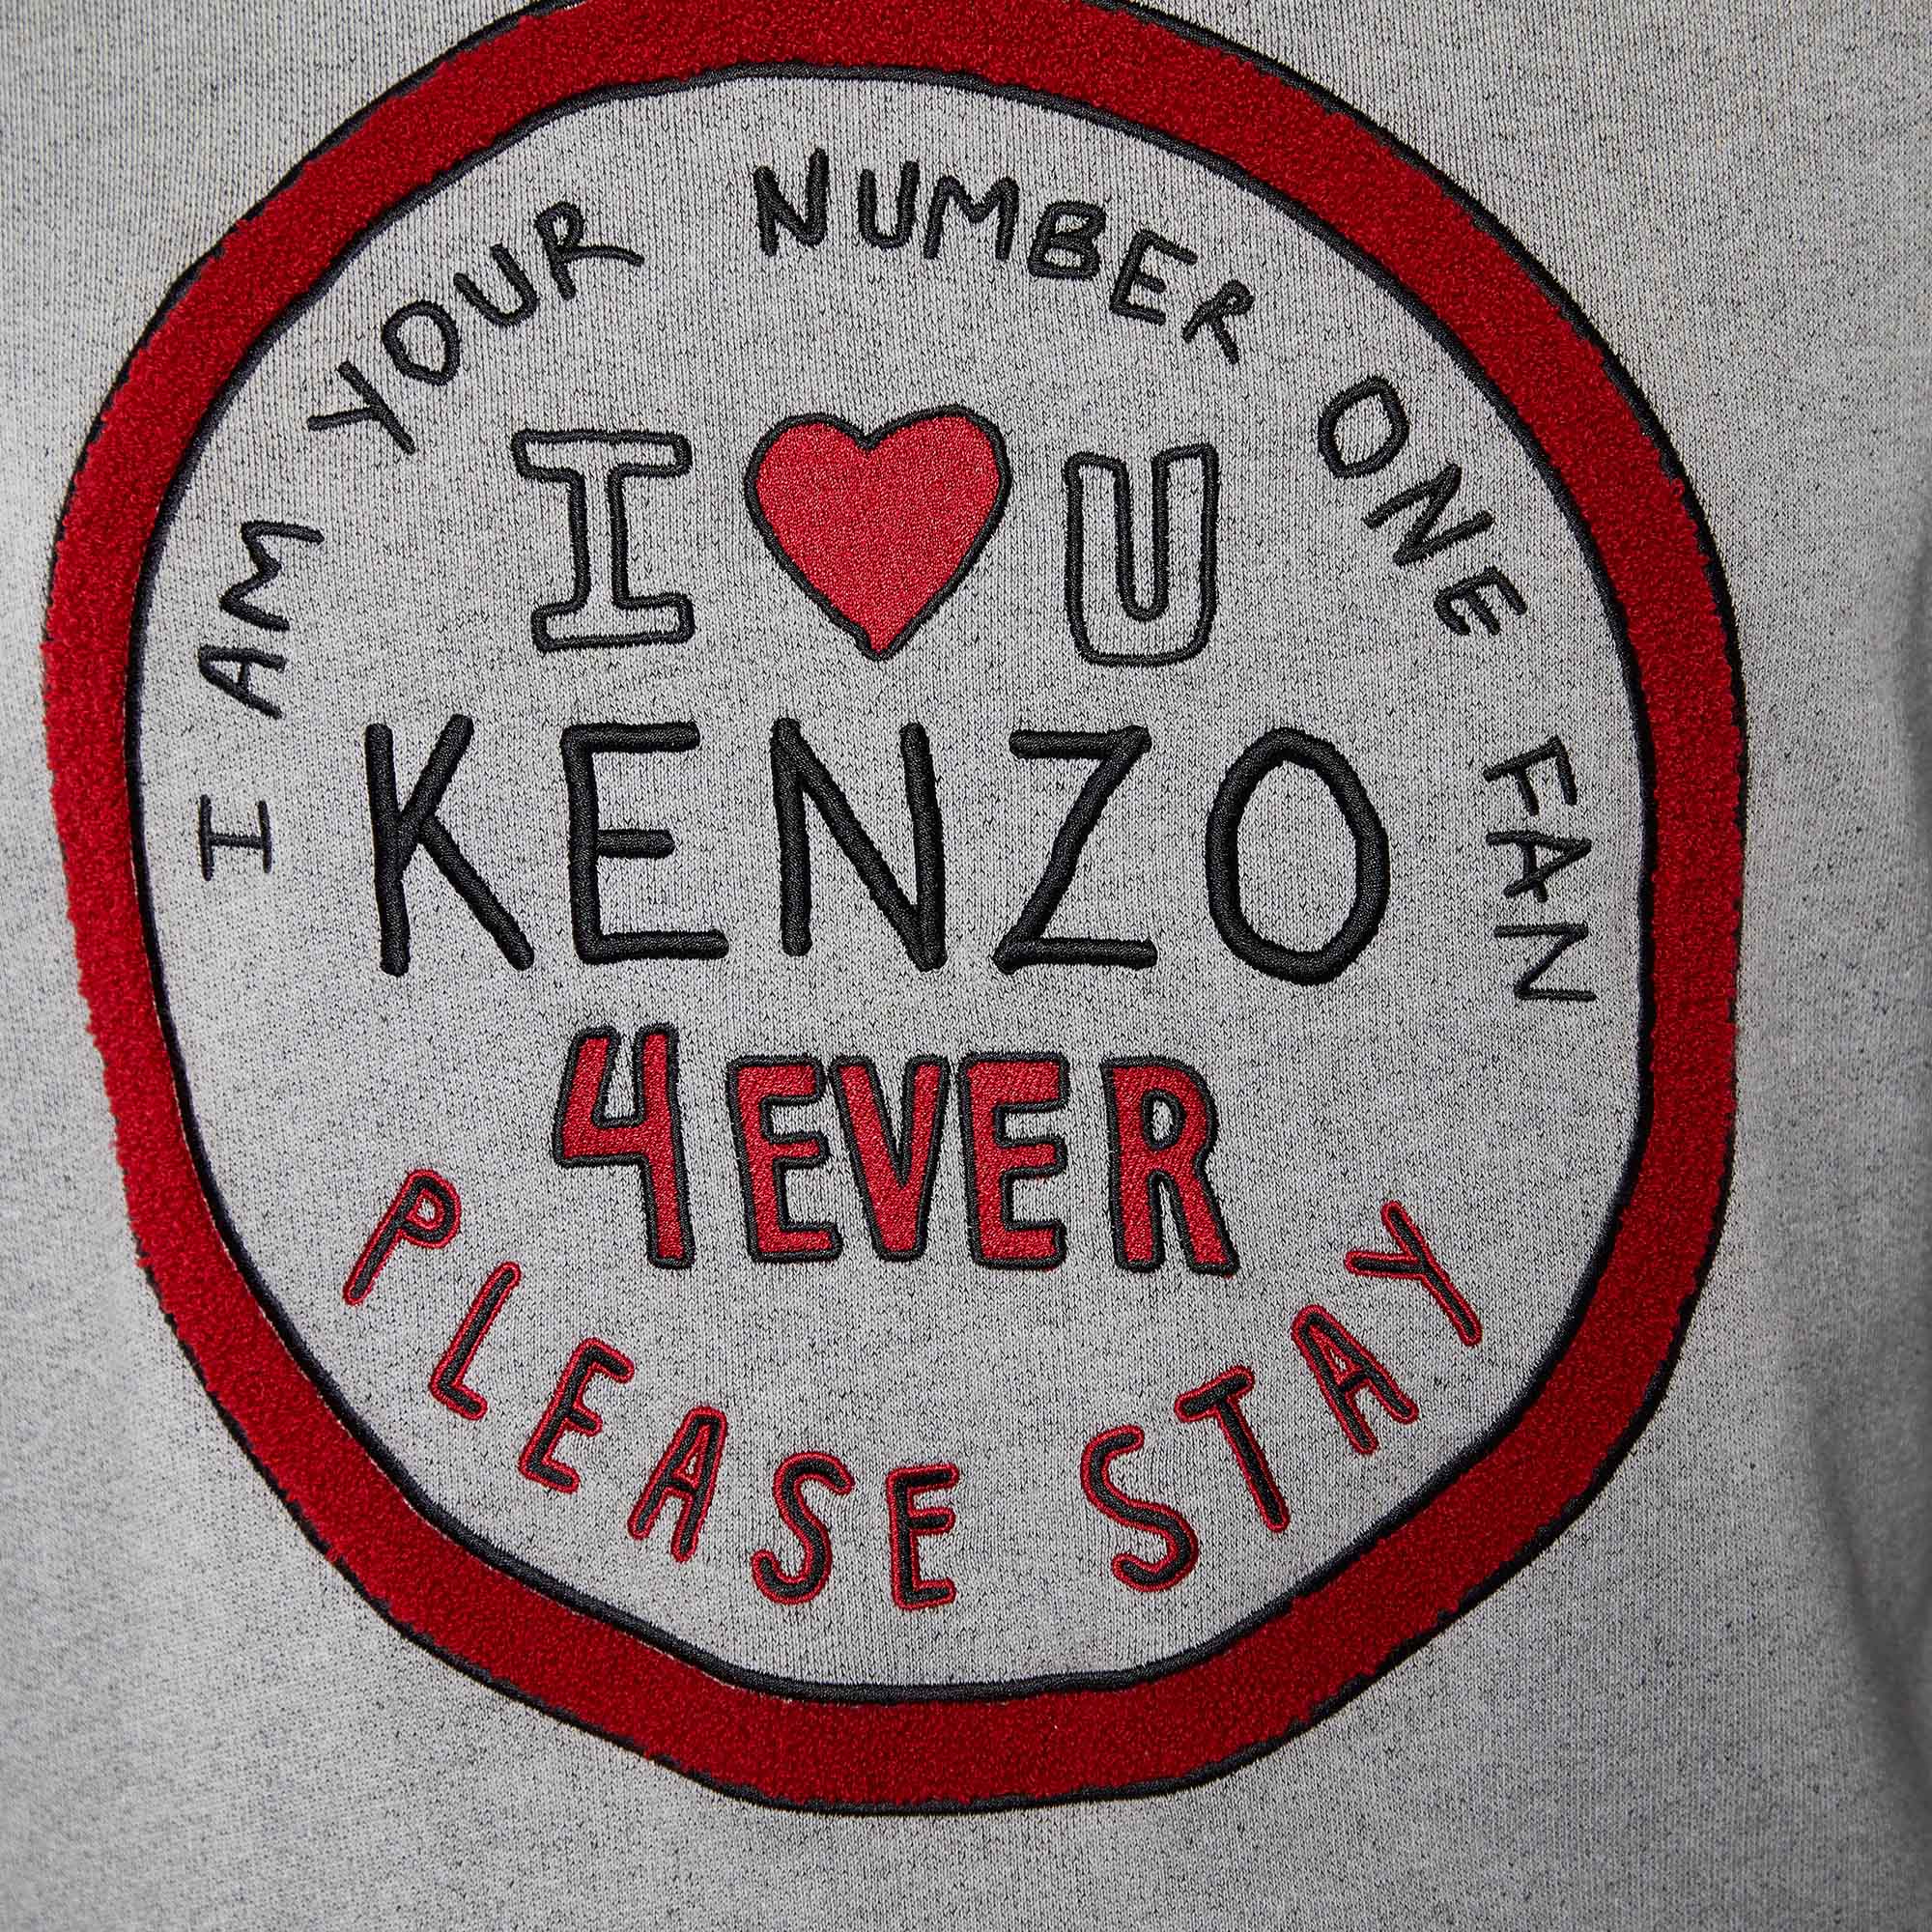 Kenzo Grey Cotton Knit I Love U Embroidered Sweatshirt M